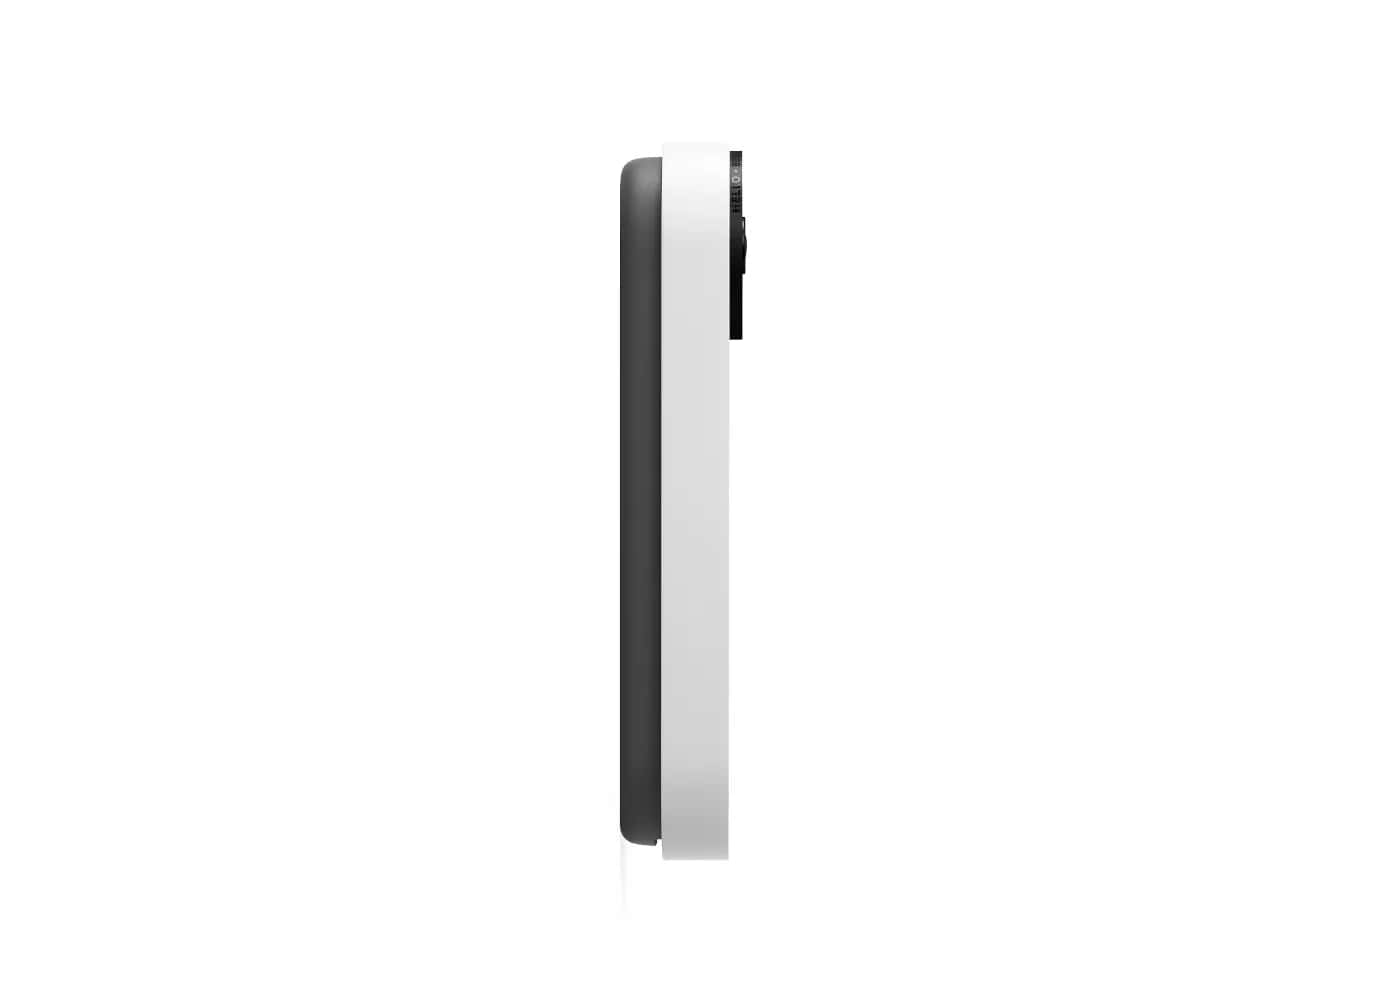 Google Nest Doorbell (Battery) GA01318-US Snow - US